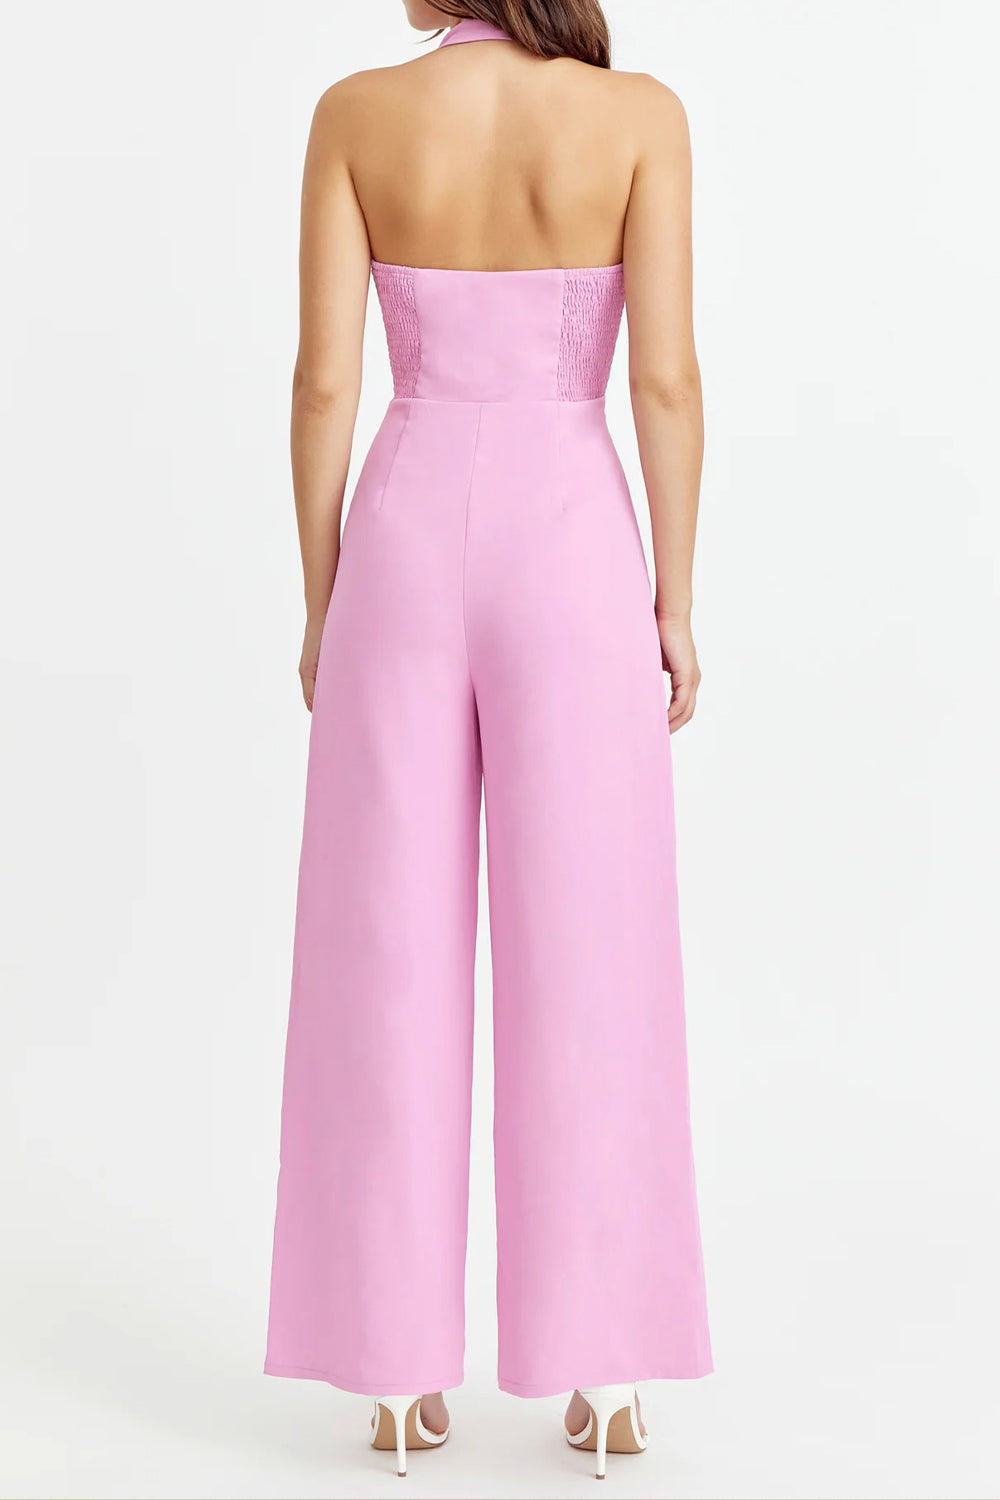 Ramses Pink Jumpsuit w/ Halter-Neck Vest Top | La petite garçonne On Model Back